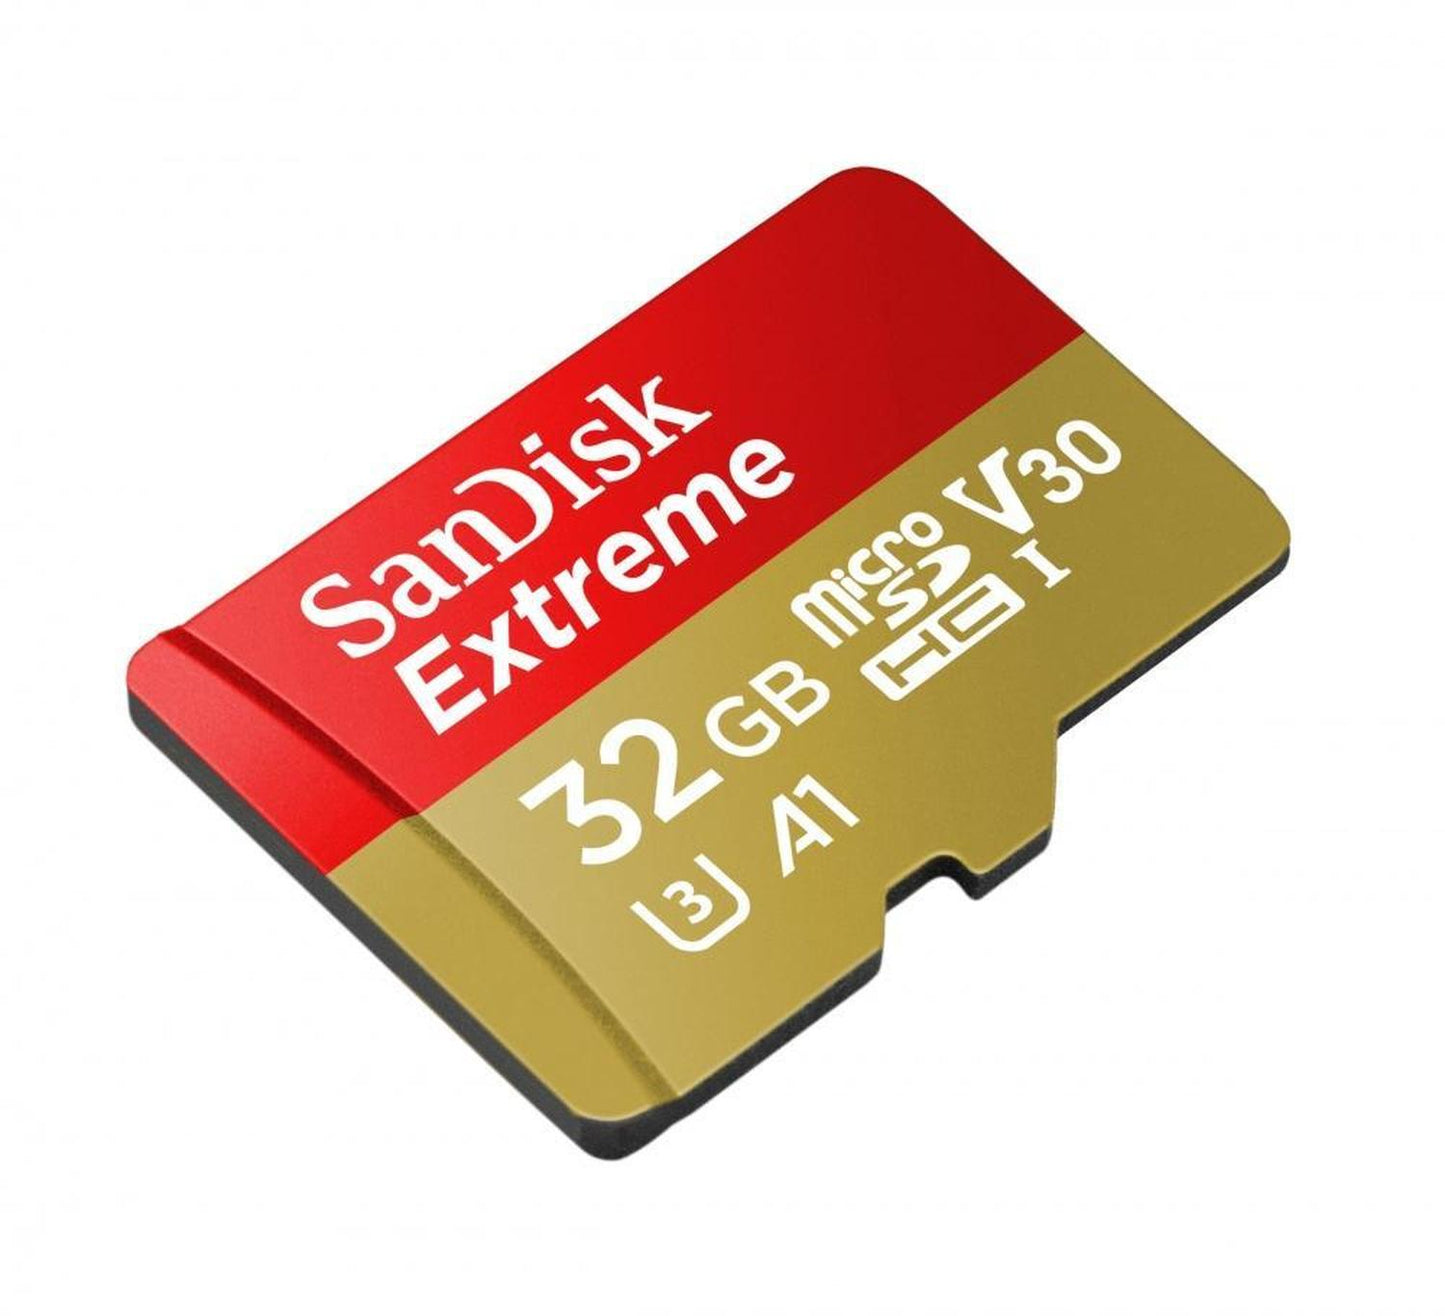 Memoria Flash SanDisk Extreme, 32GB MicroSDHC UHS-I Clase 10, con Adaptador